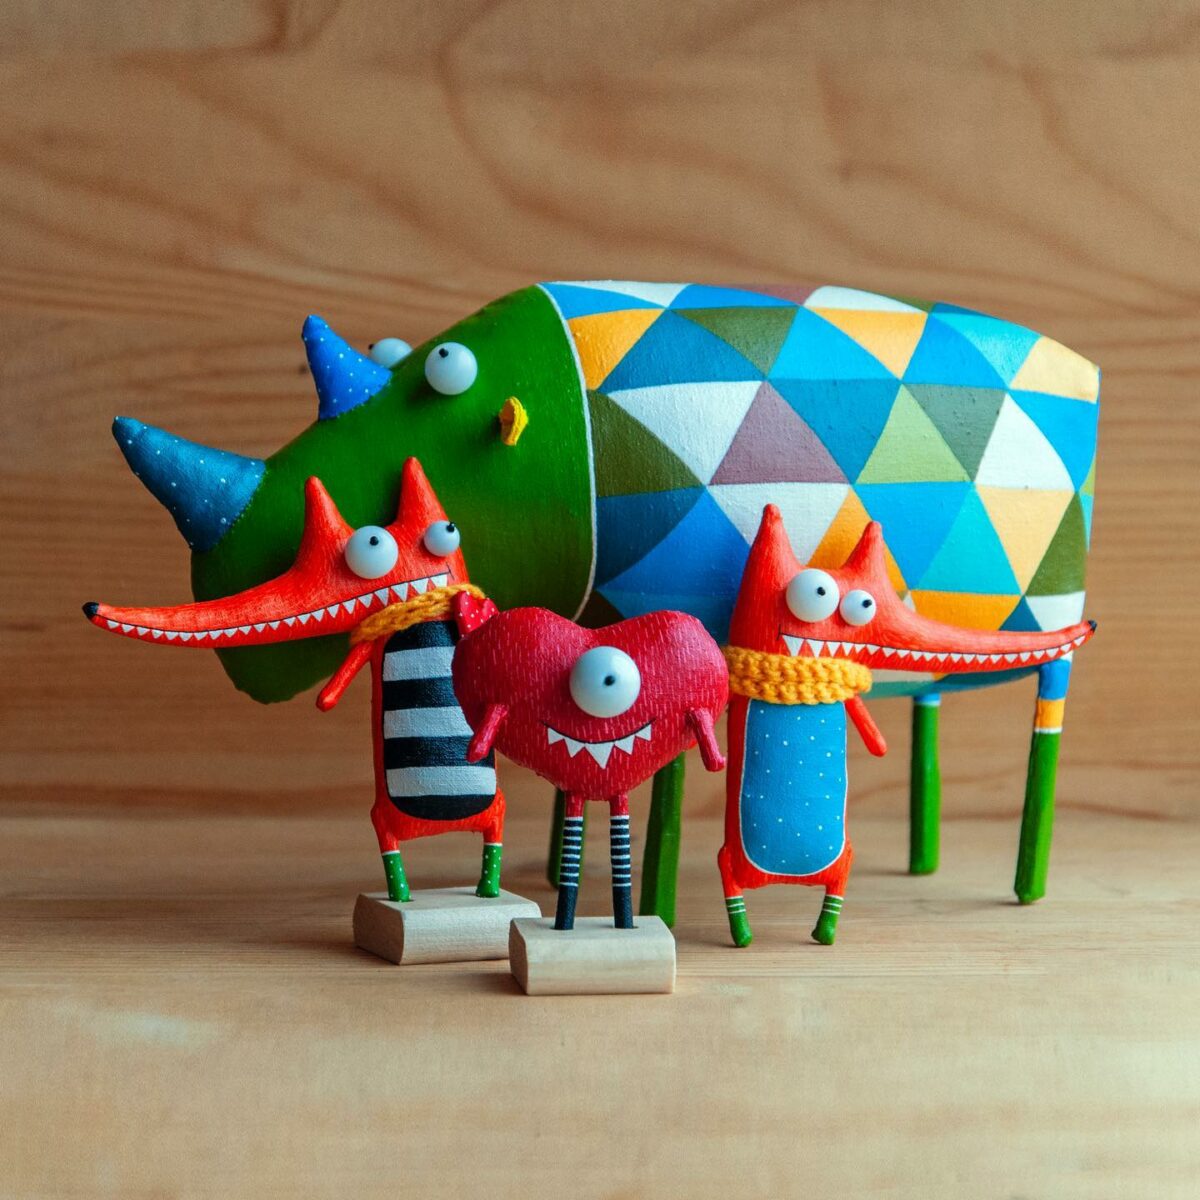 Colorful Handmade Toys Of Quirky Creatures By Lidiya Marinchuk (6)